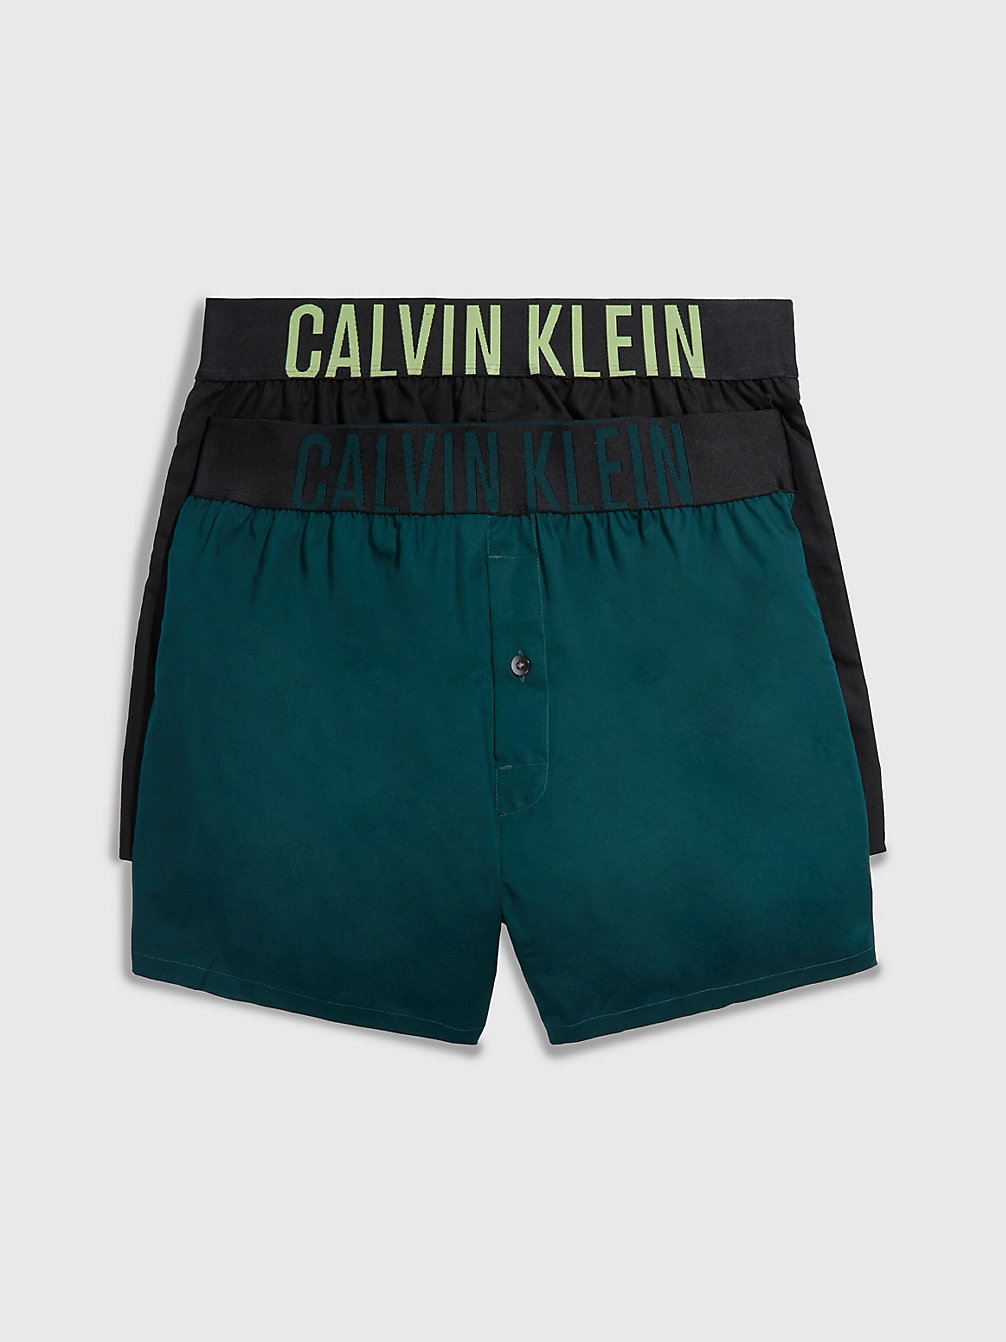 B-TROPIC LIME, PONDEROSA PINE 2 Pack Slim Fit Boxers - Intense Power undefined men Calvin Klein